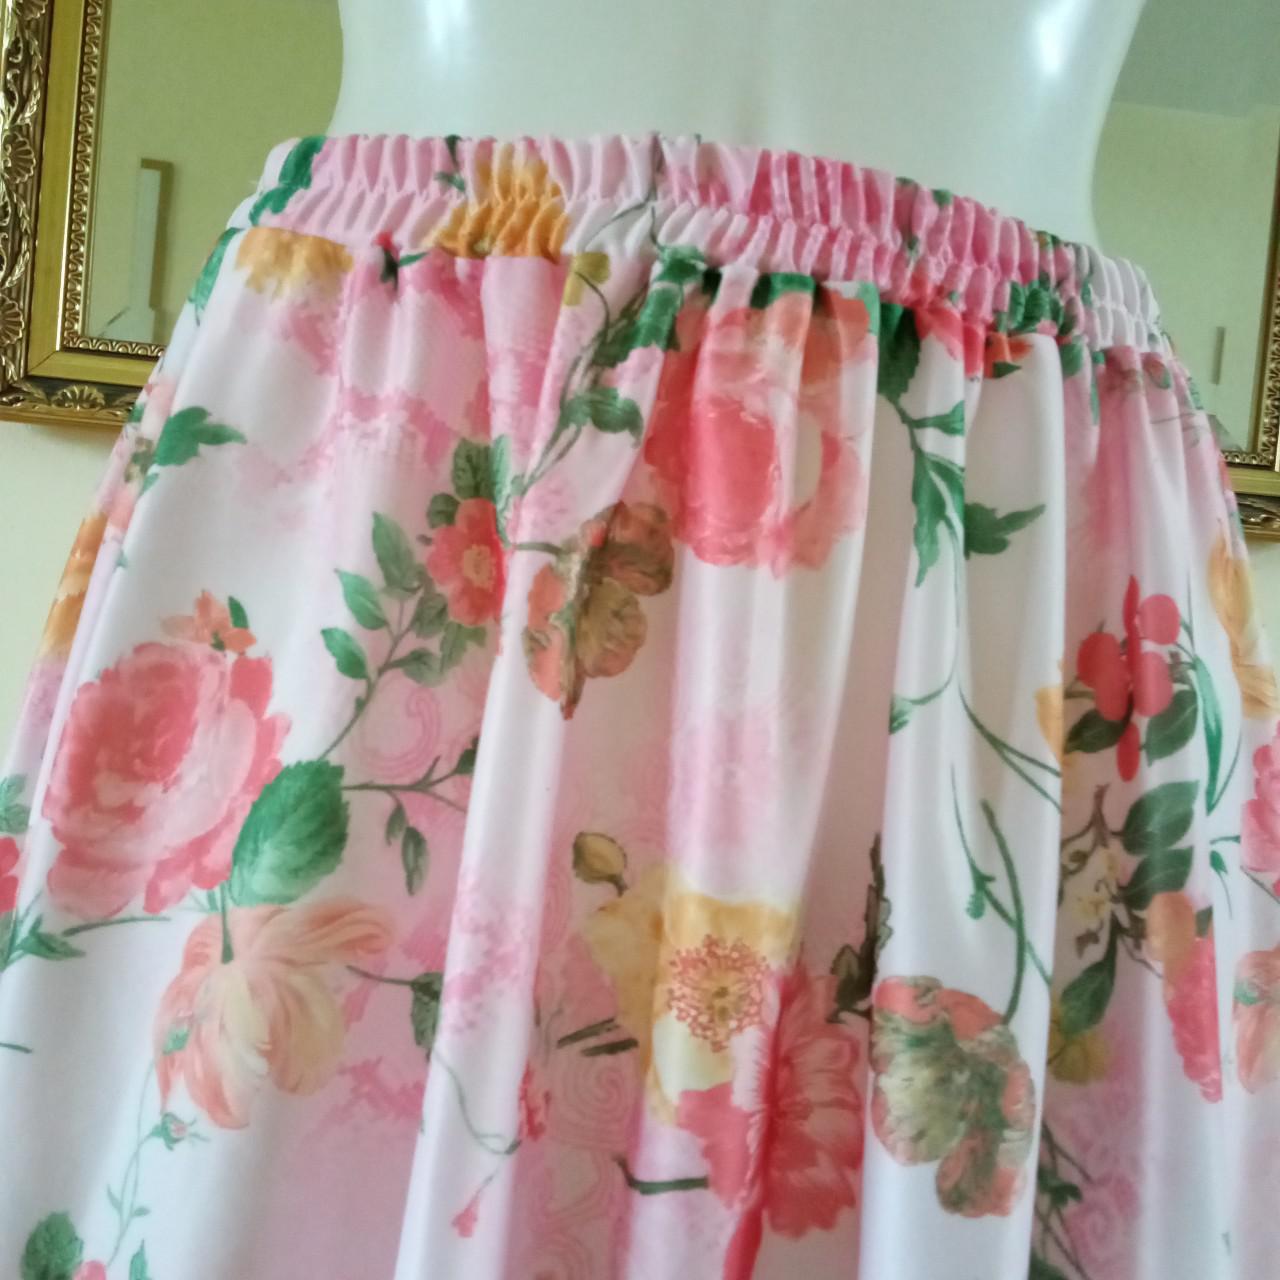 Product Image 2 - Vintage Pink Floral pattern Skirt.
Multicoloured